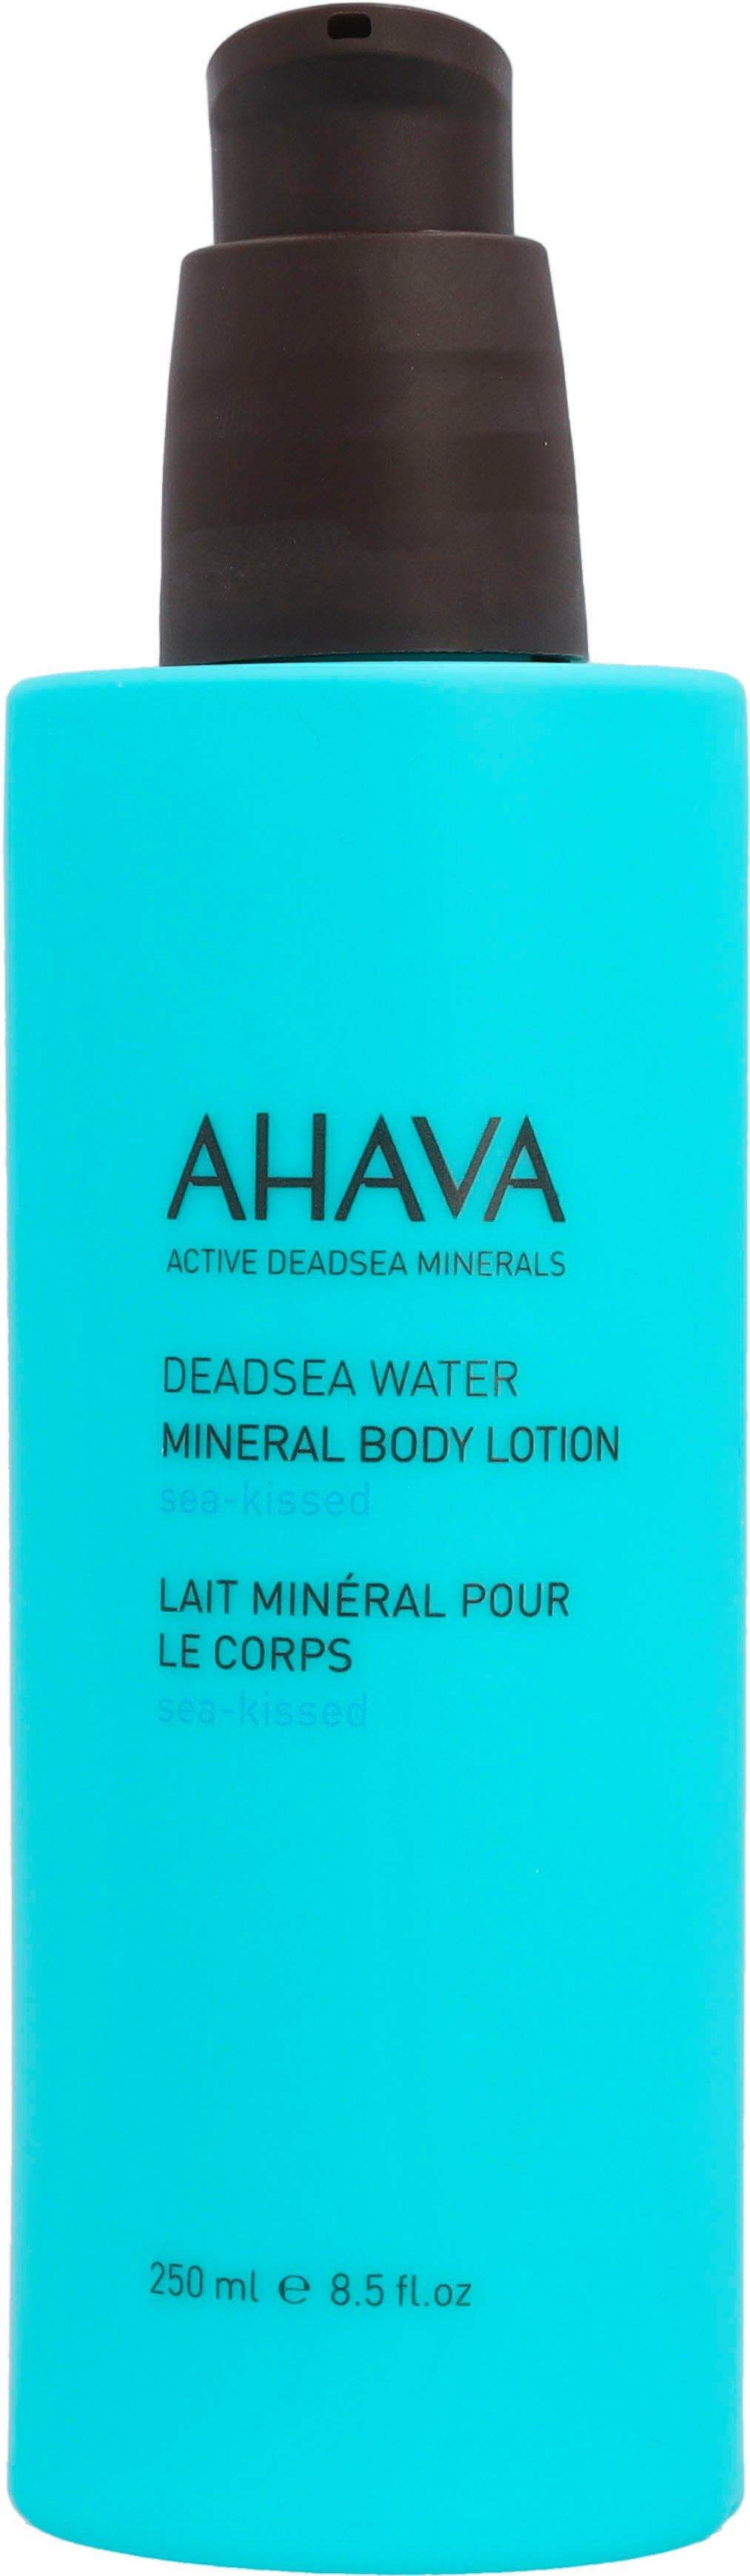 Sea-Kissed Körperlotion Water Deadsea AHAVA Mineral Body Lotion